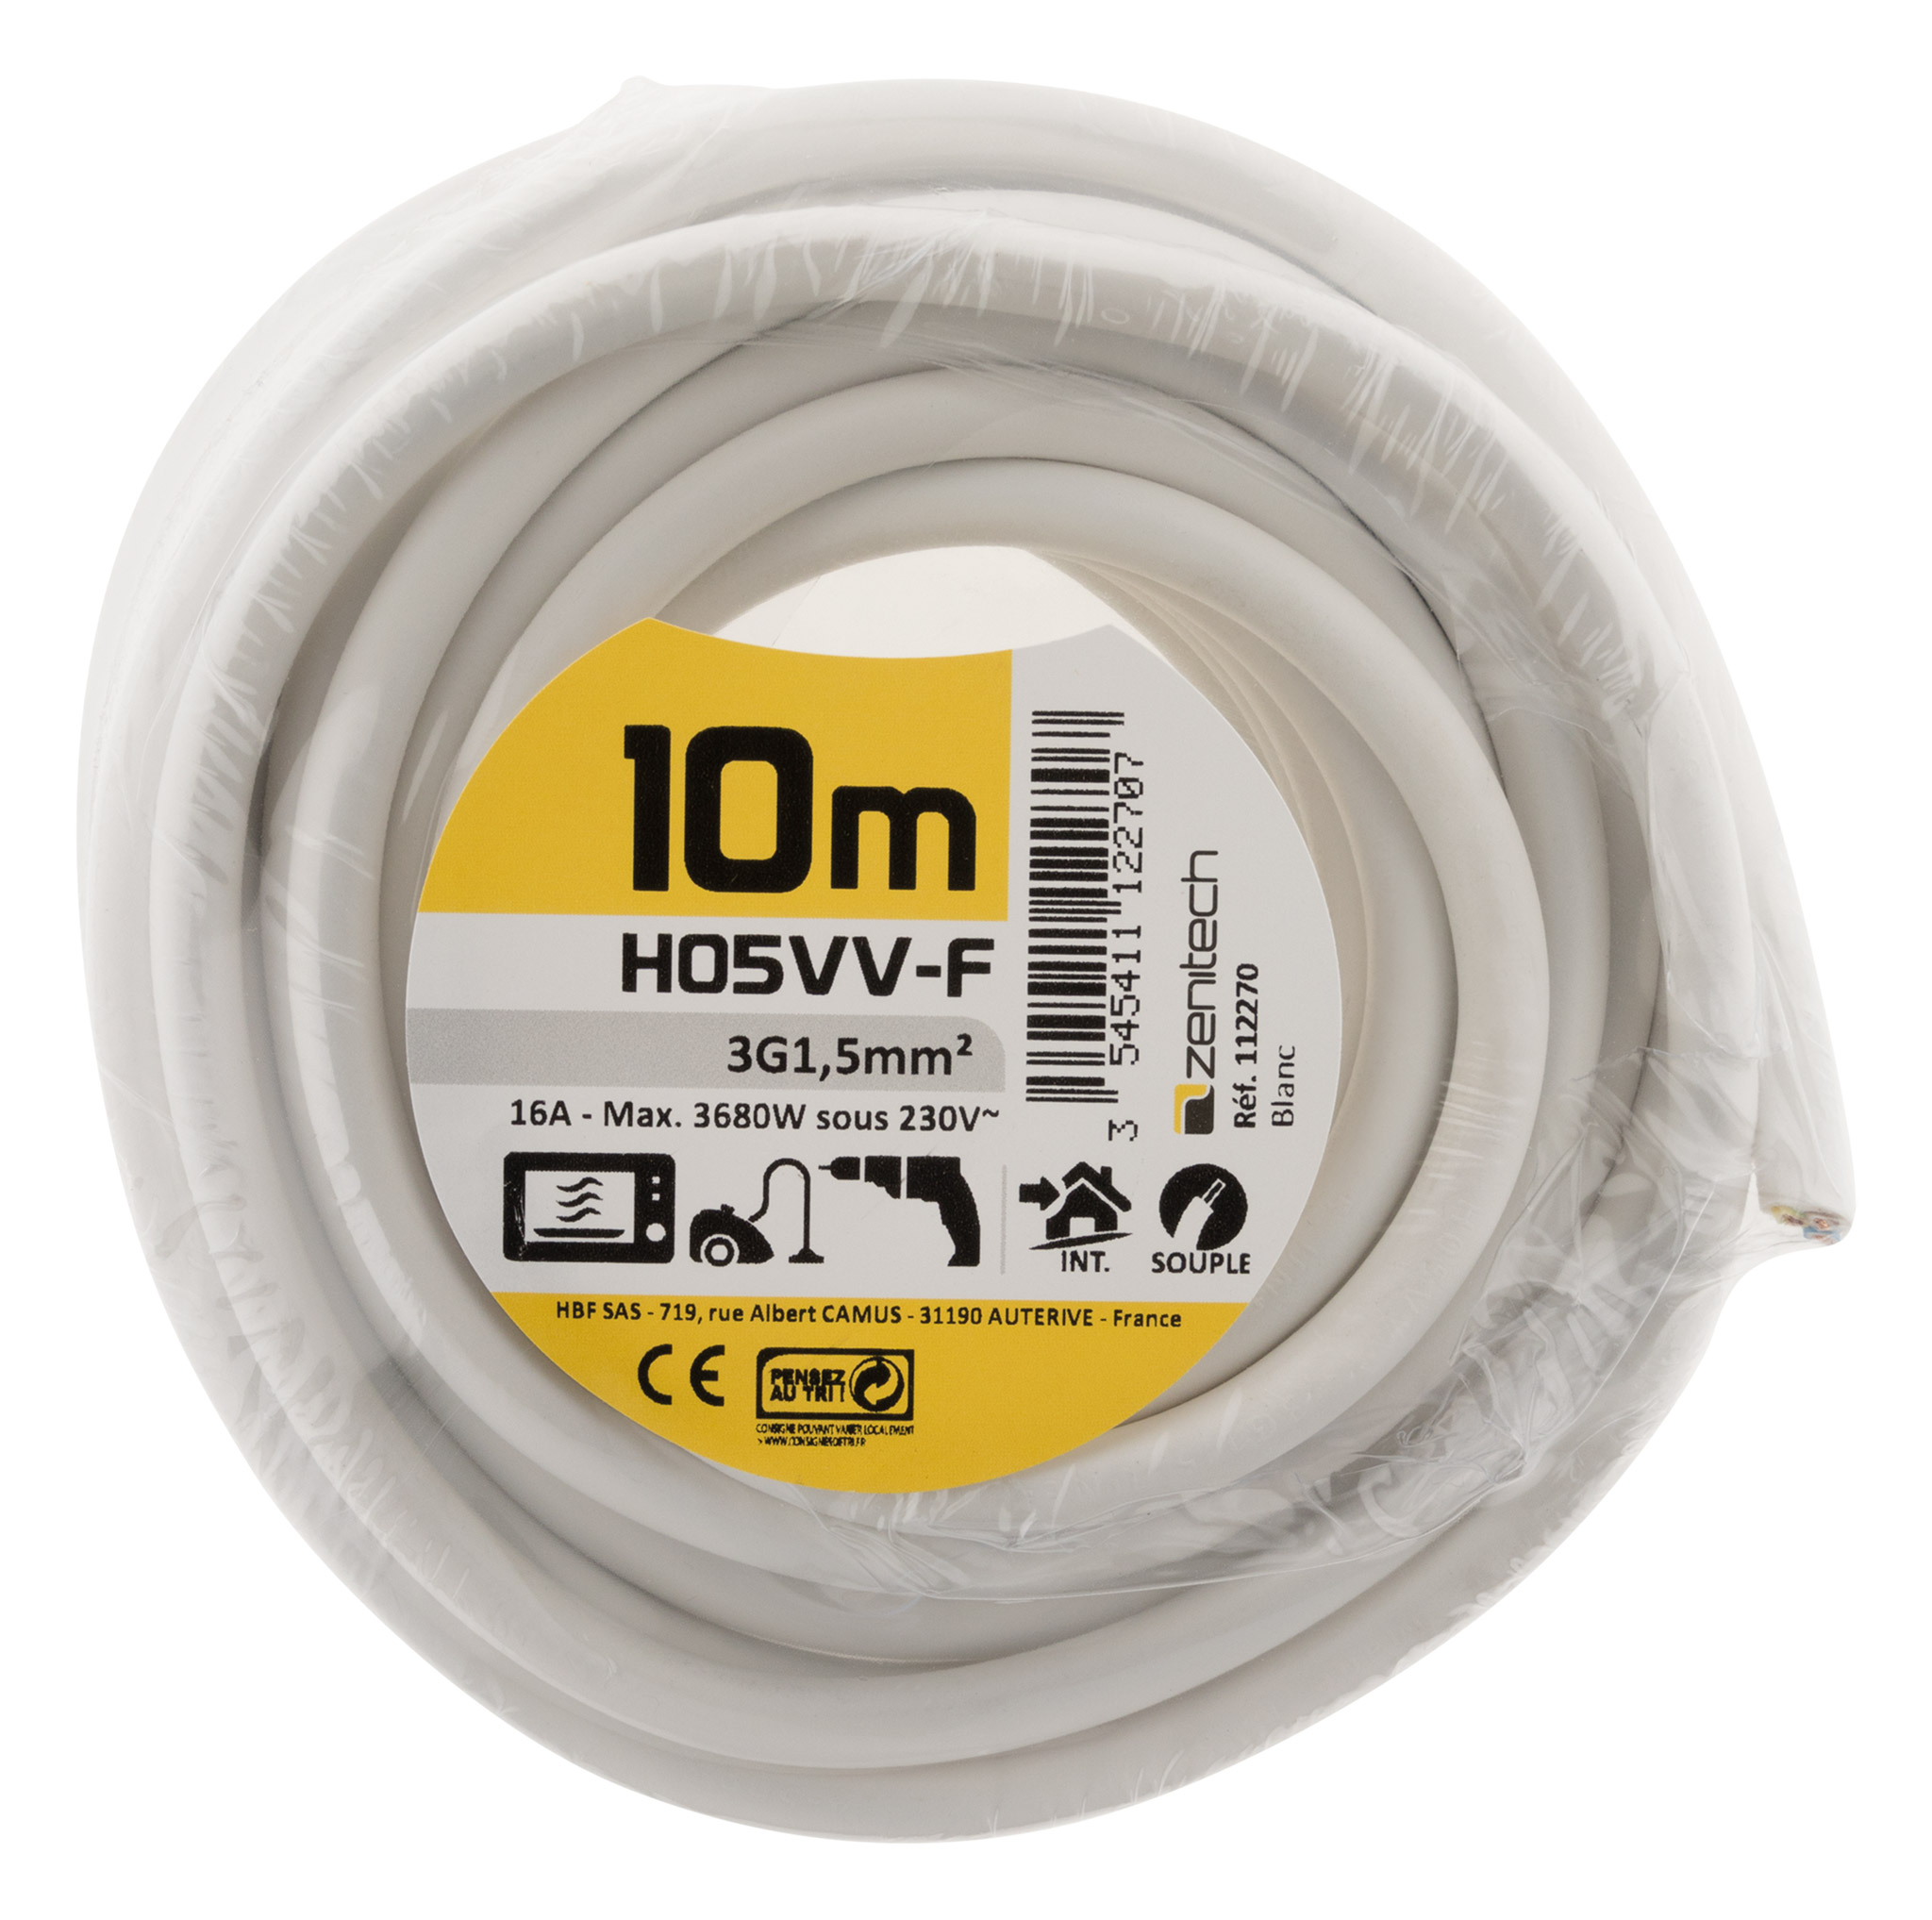 Cable ho5vvf 3x1.5 blanc 10m - plasto - INOTECH